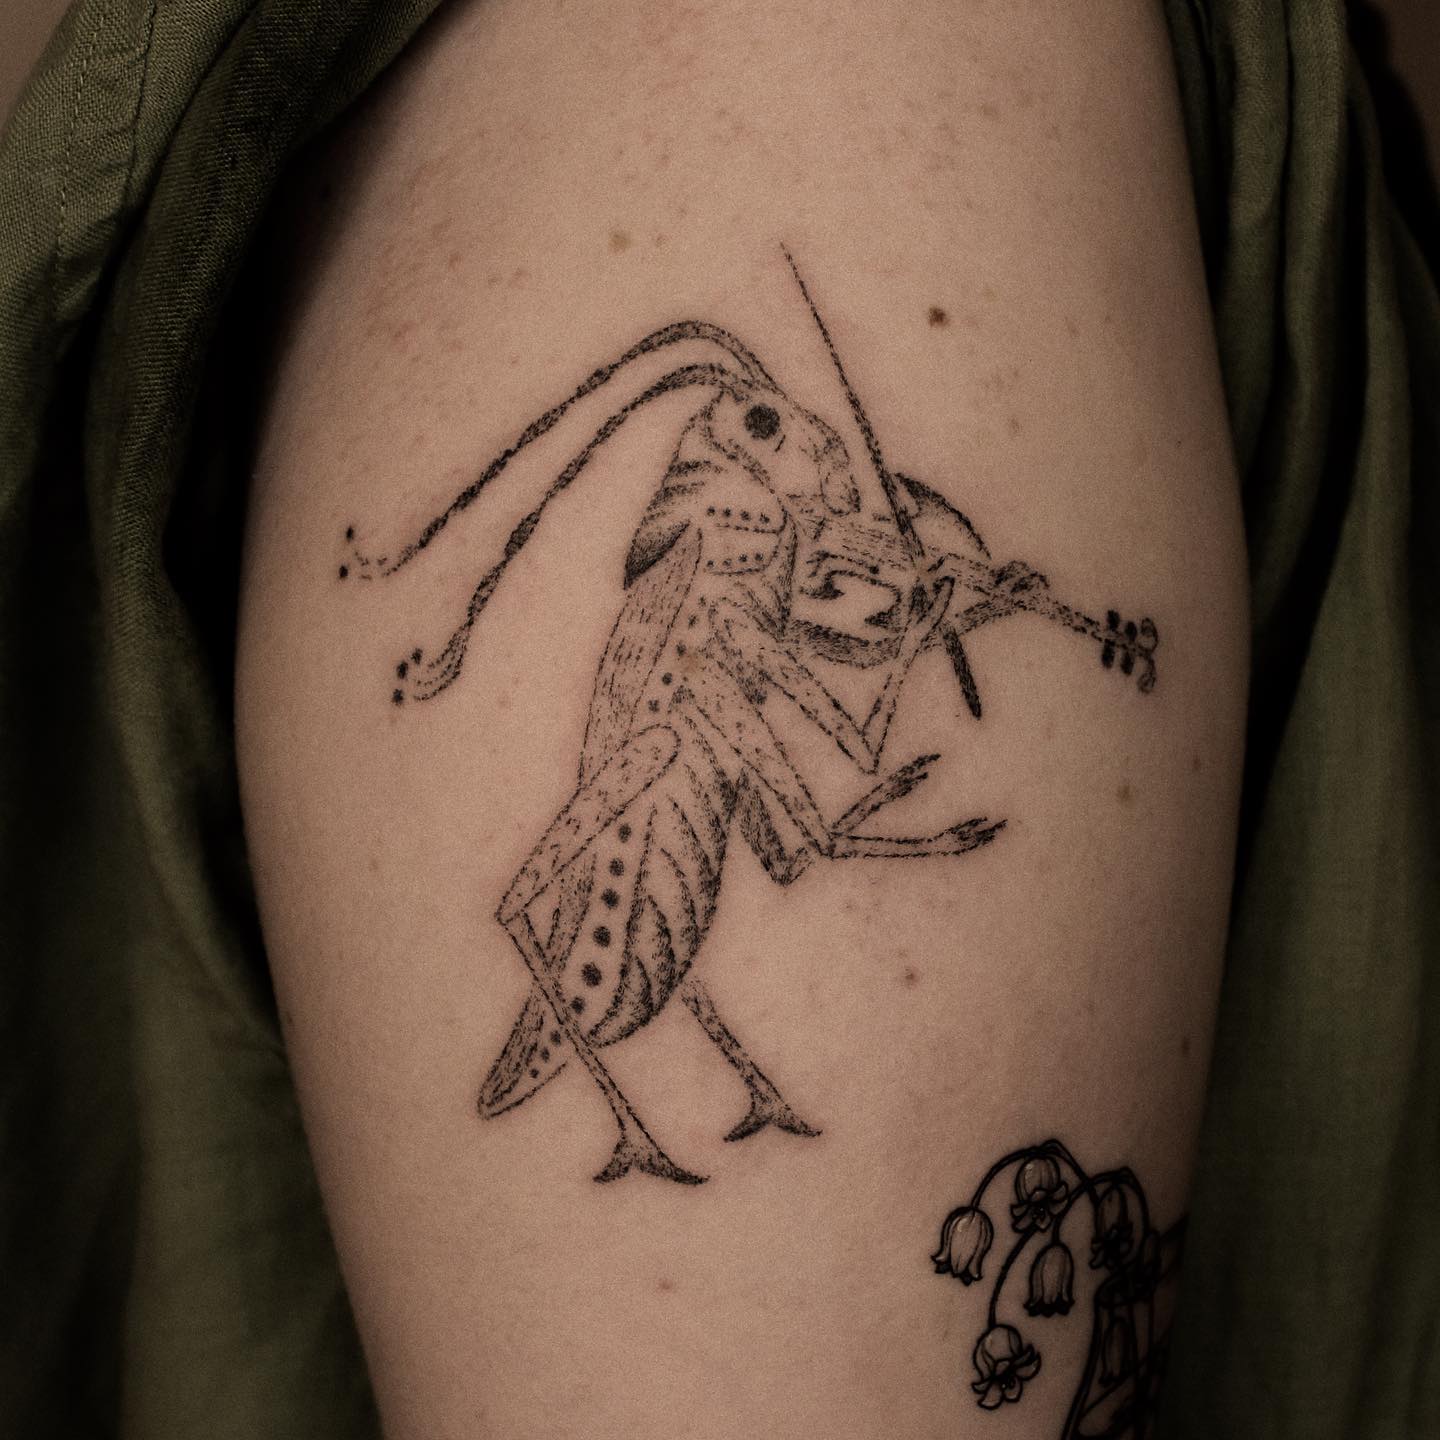 Grasshopper tattoo ideas by les.lezardises